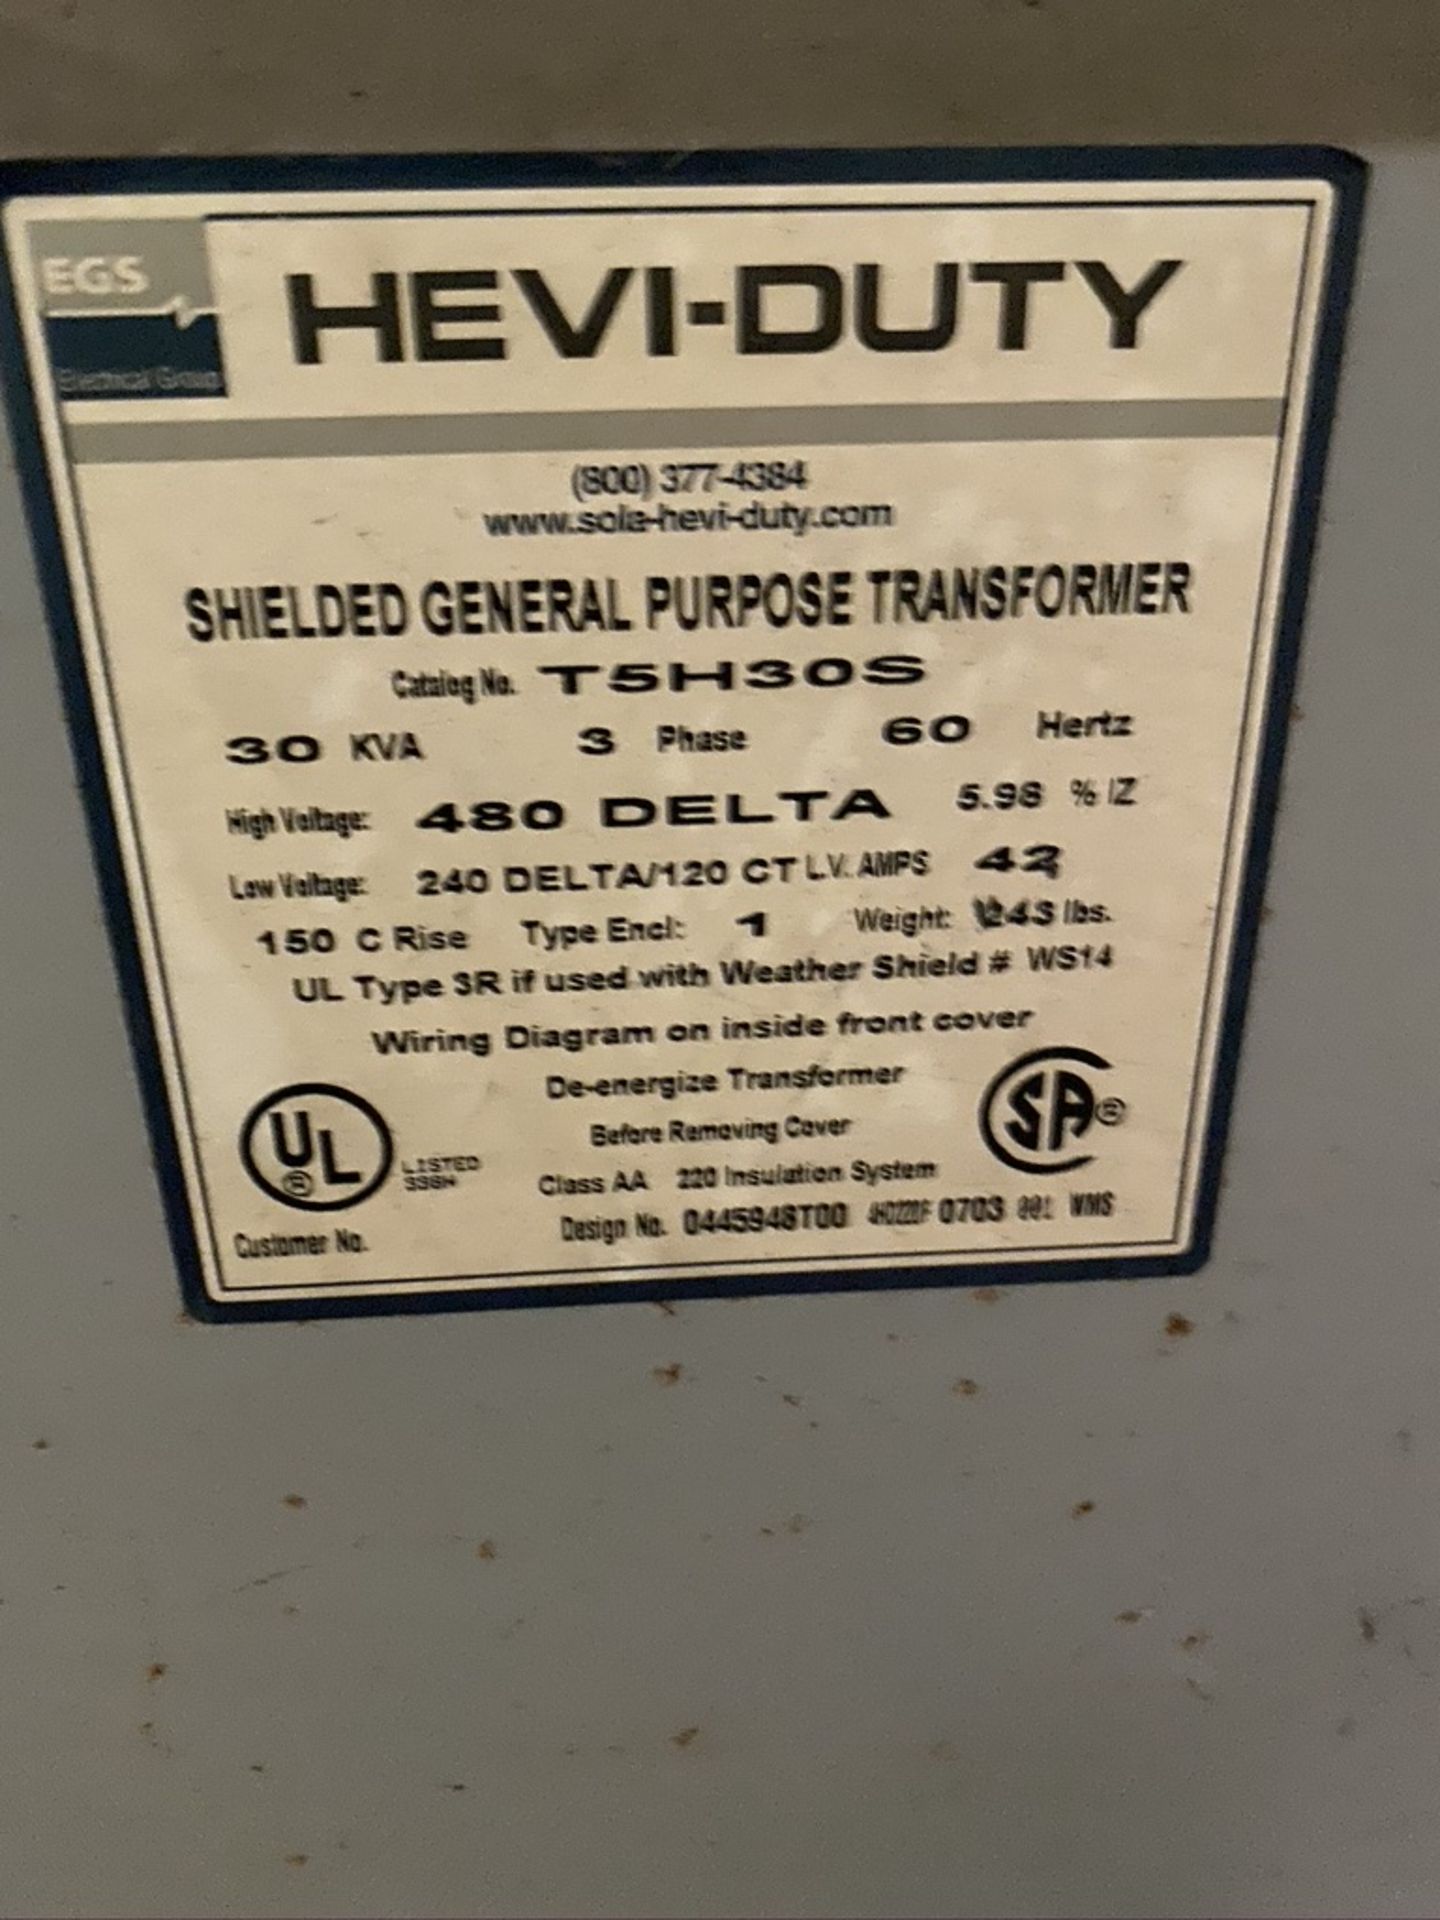 EGS heavy duty shielded General purpose transformer - Image 2 of 2